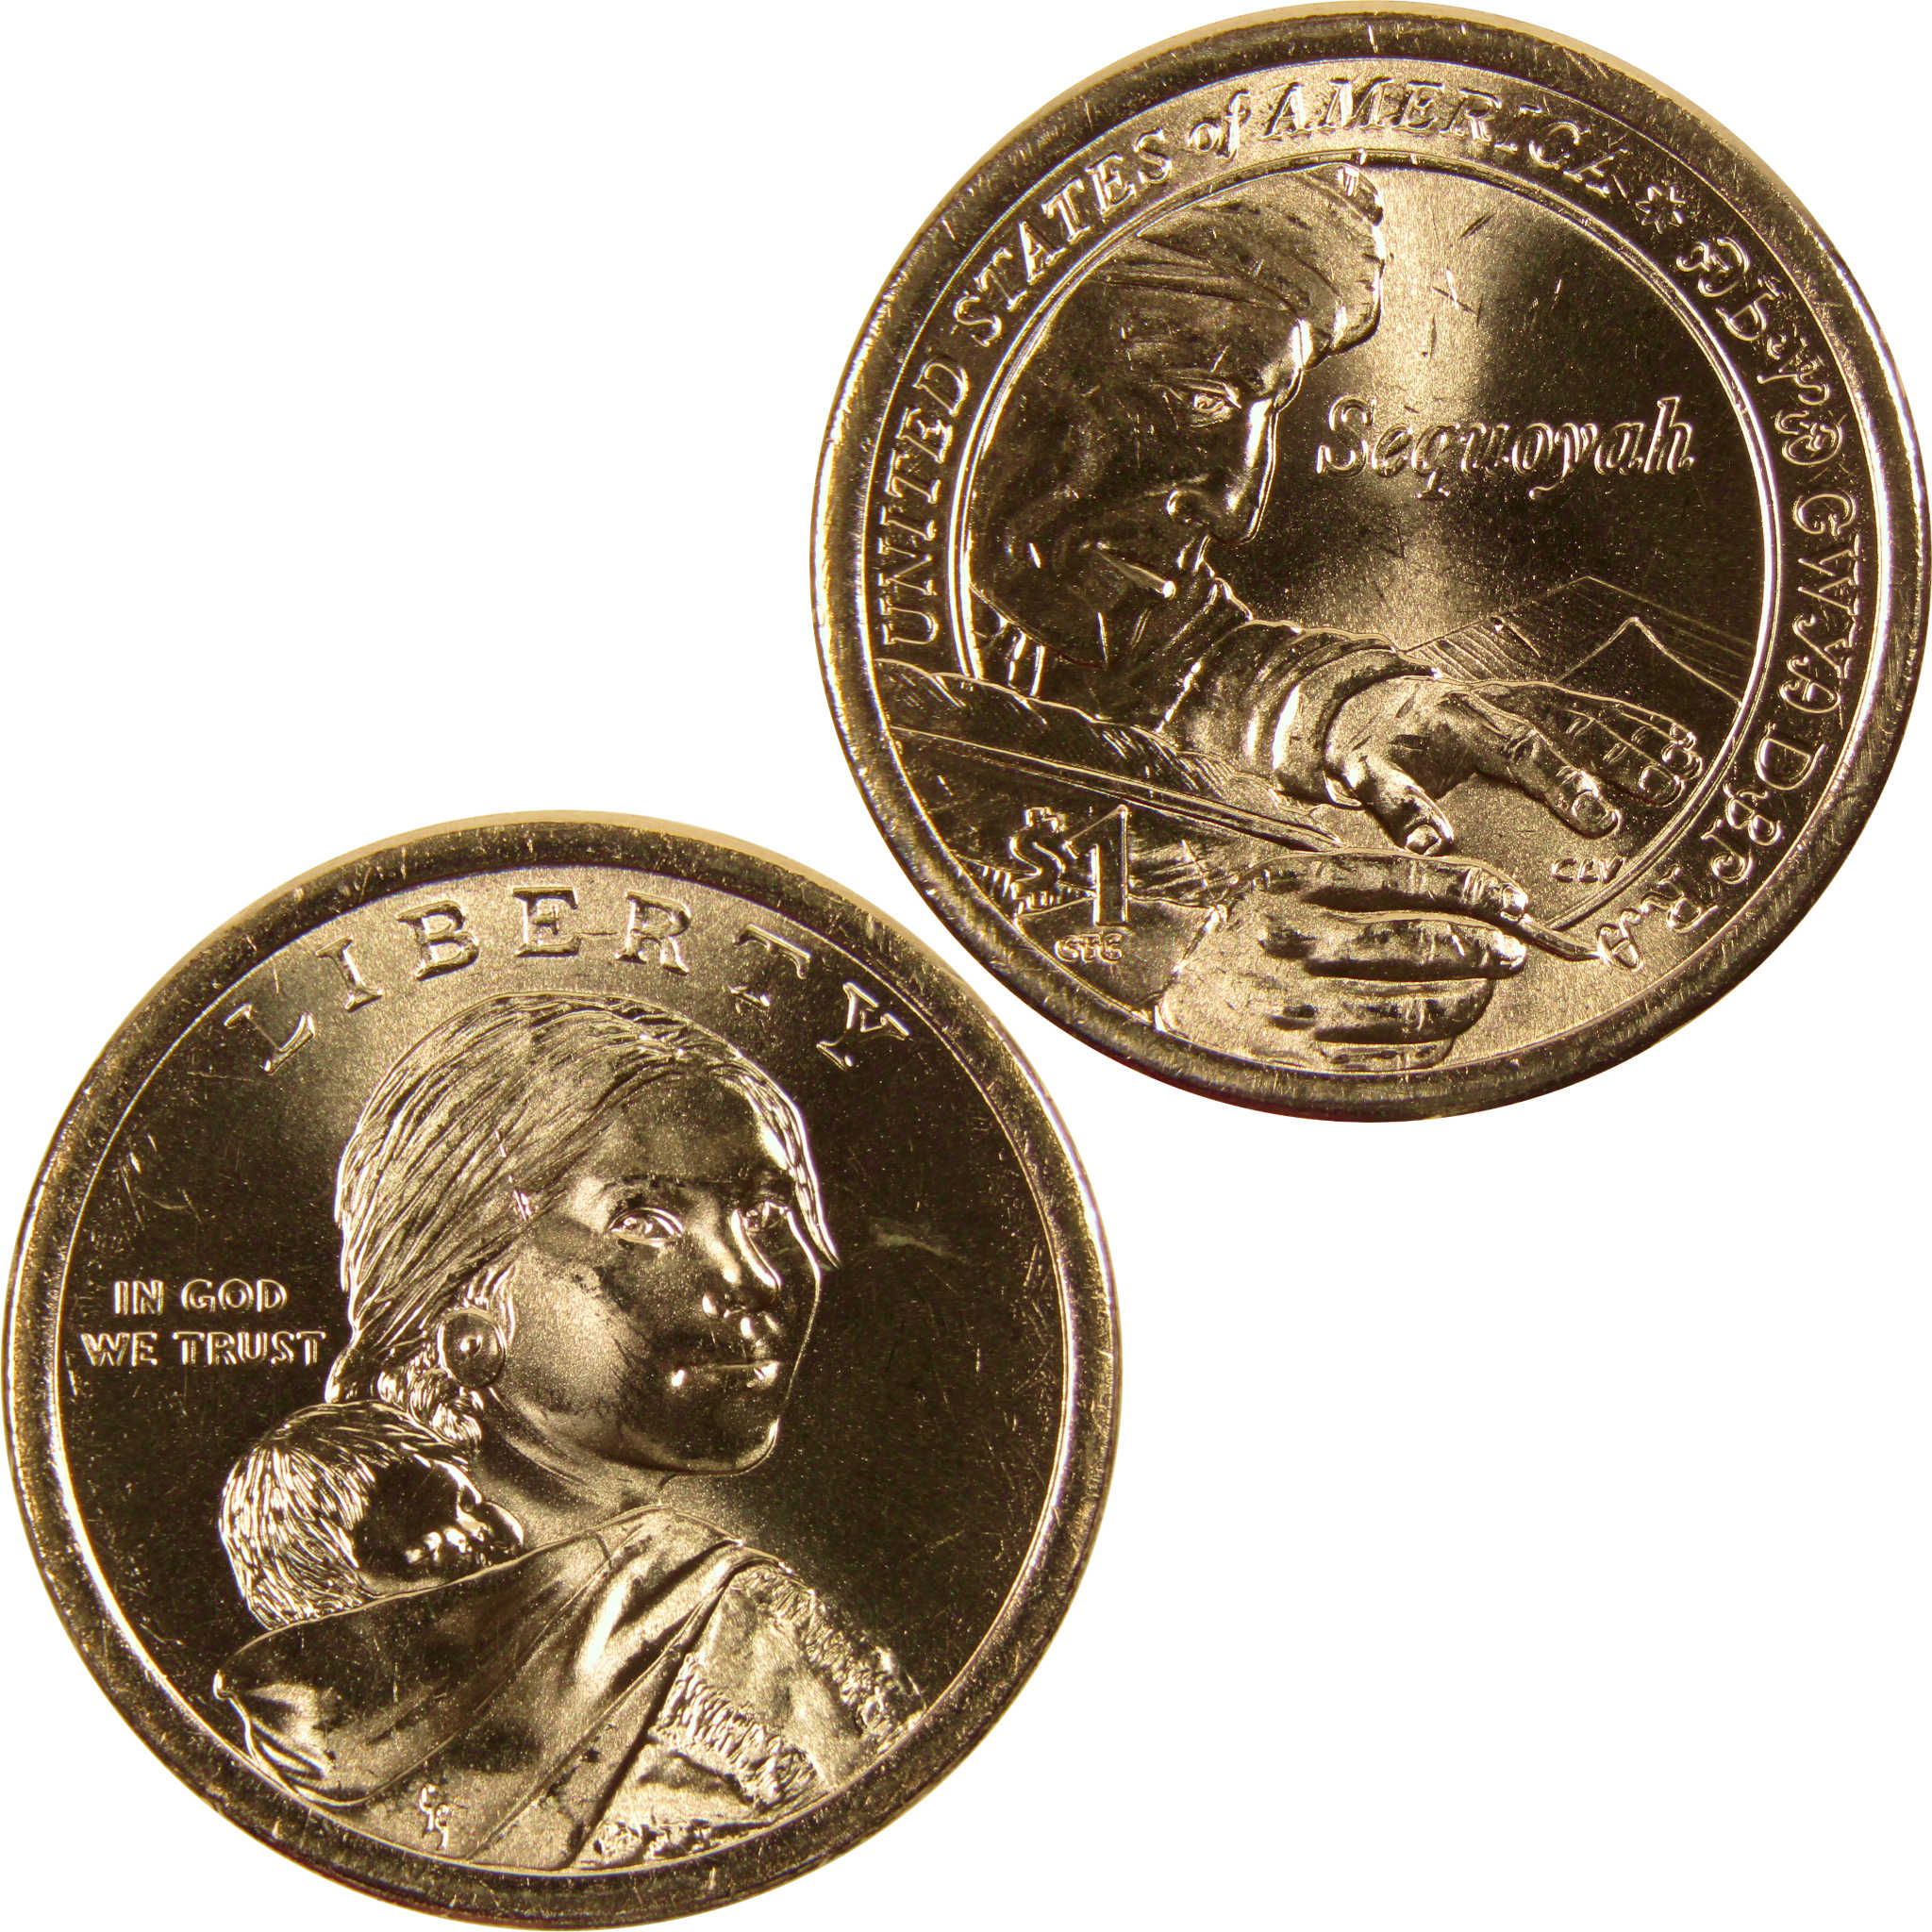 2017 D Sequoyah Native American Dollar BU Uncirculated $1 Coin